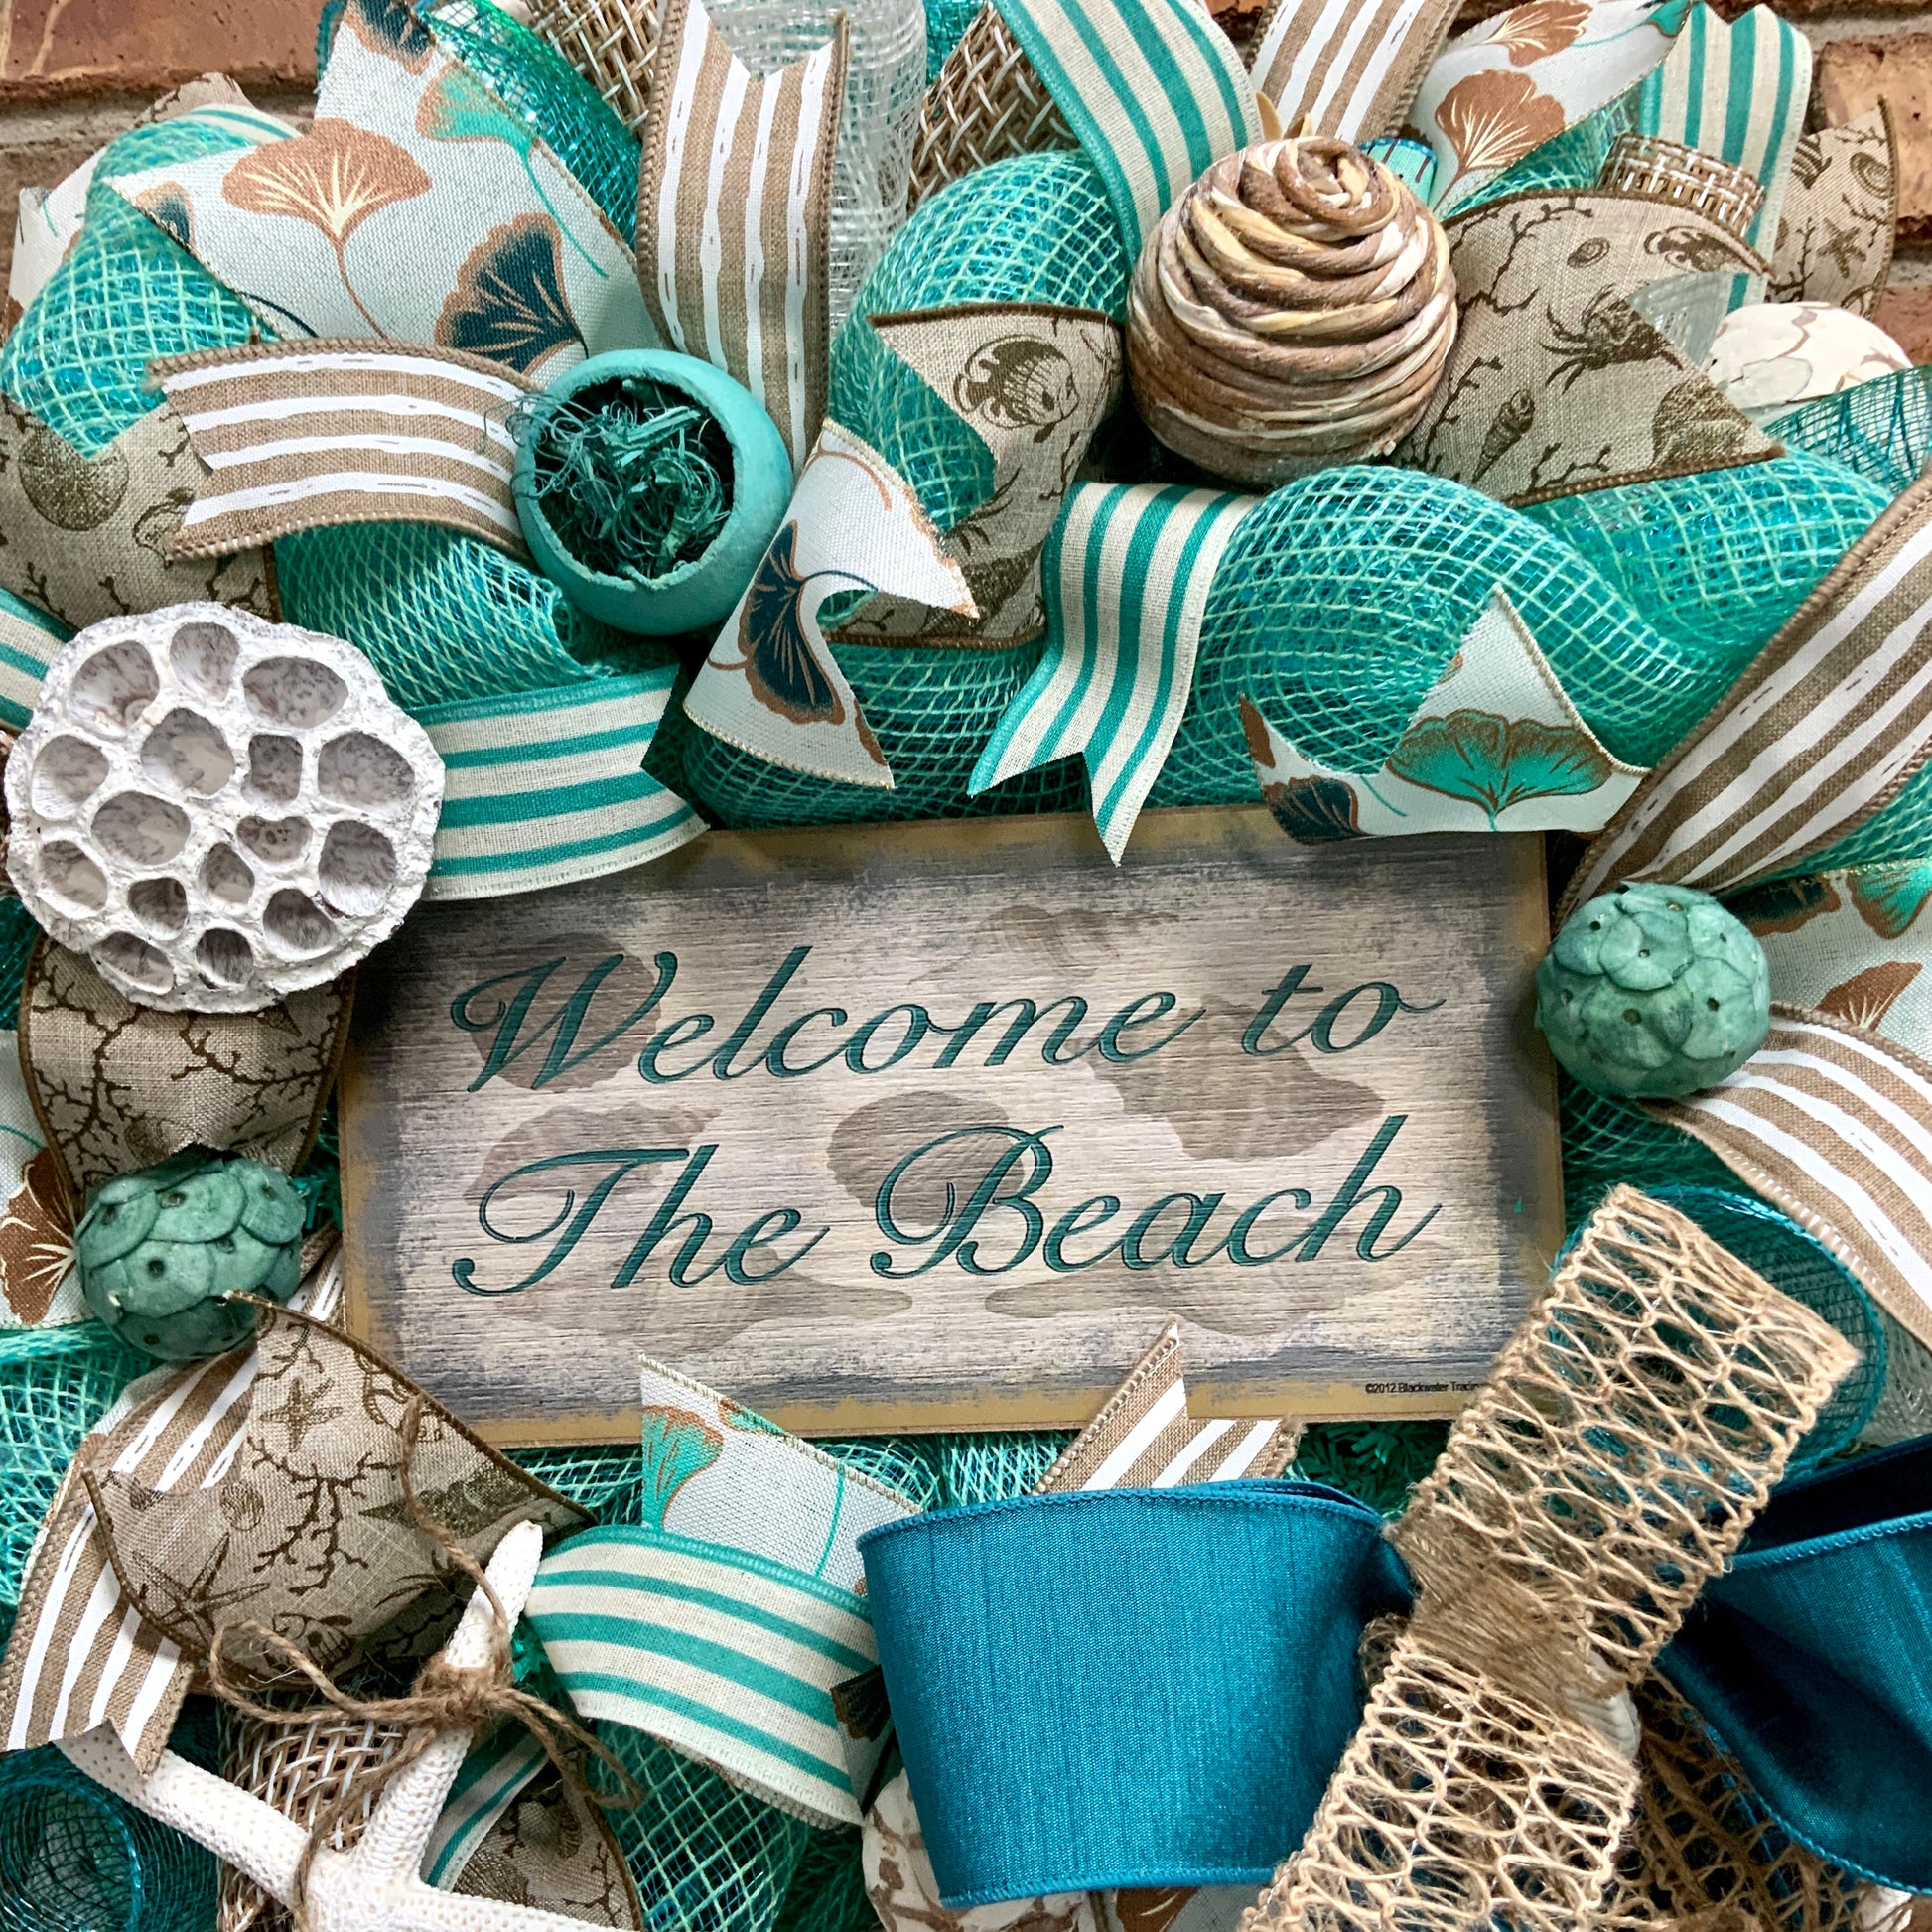 Seahorse Summer Beach Wreath Kit, Everyday Wreath Kit, Wreath Supplies